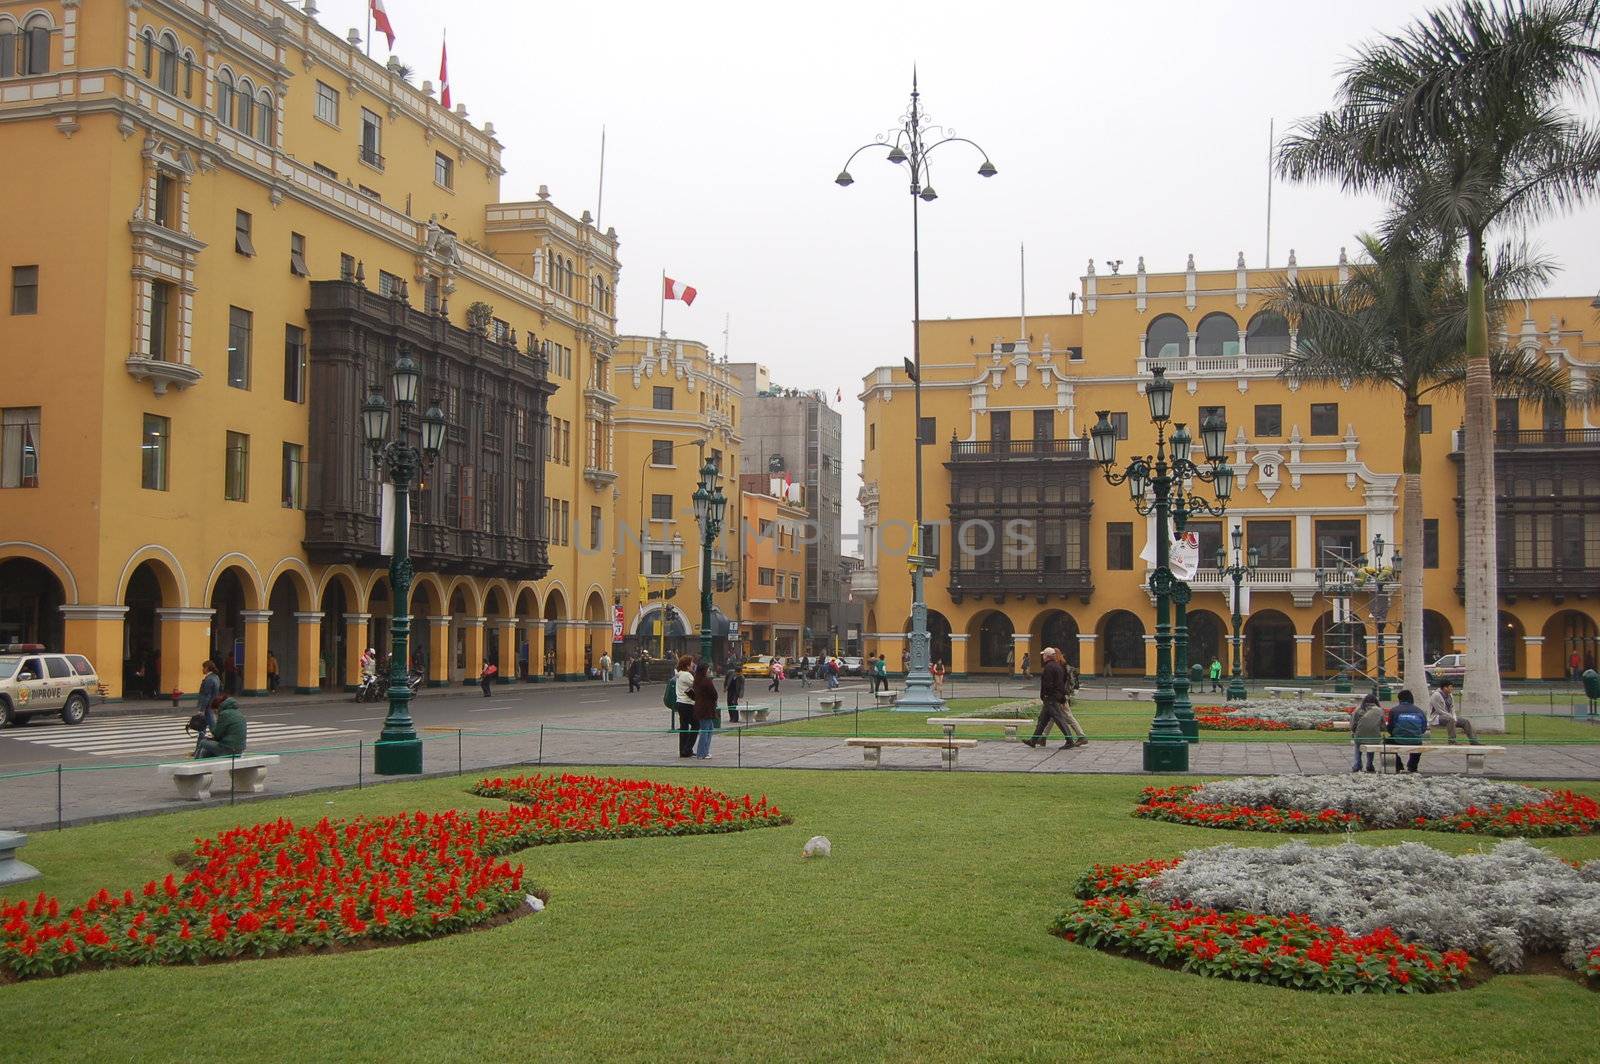 Beautifully renovated Plaza de Armas in Lima, Peru